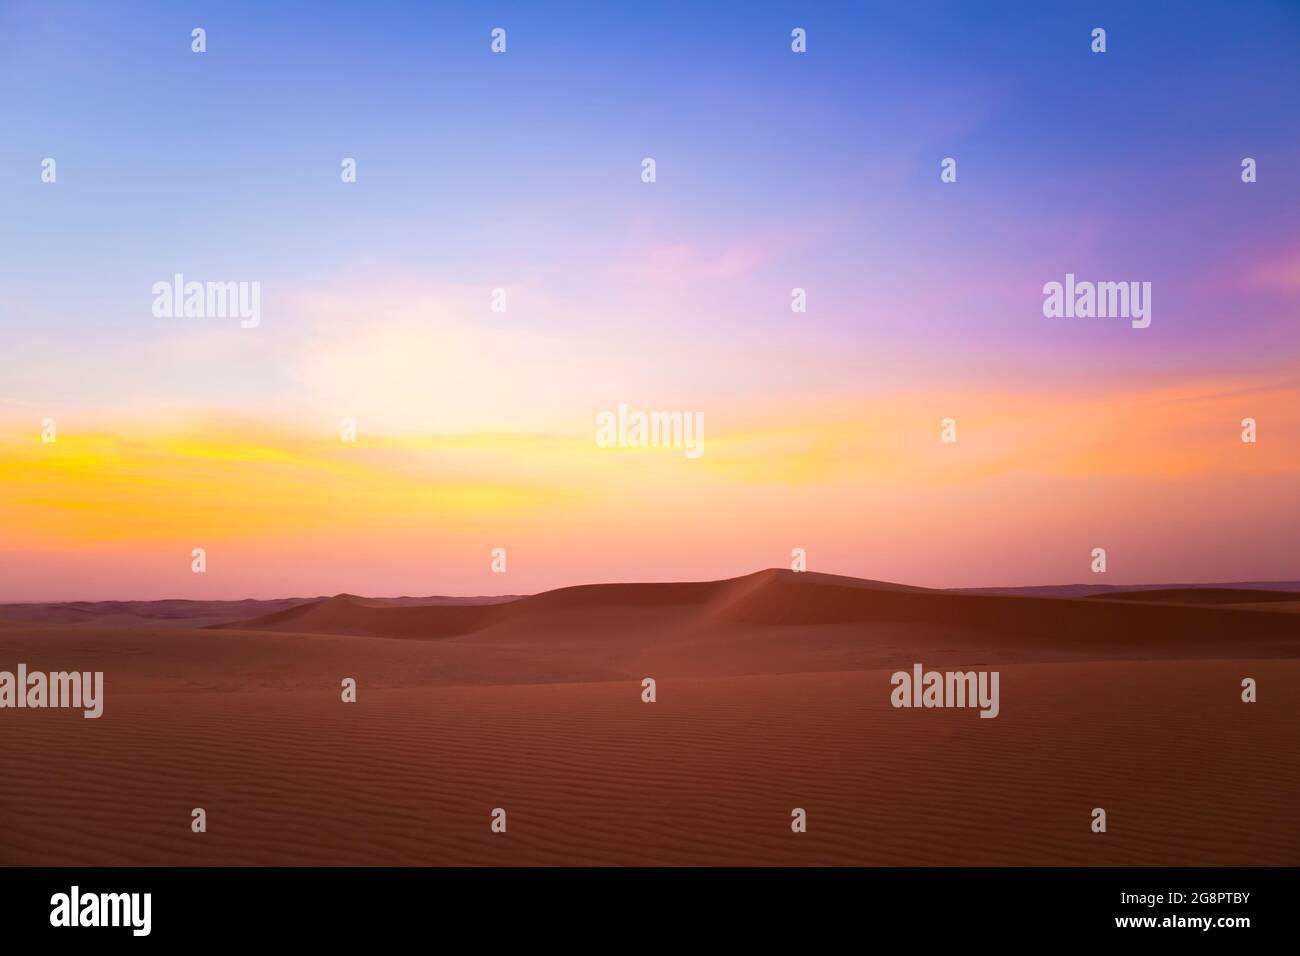 Desert landscape - sand dunes - Beautiful sunset background Stock Photo